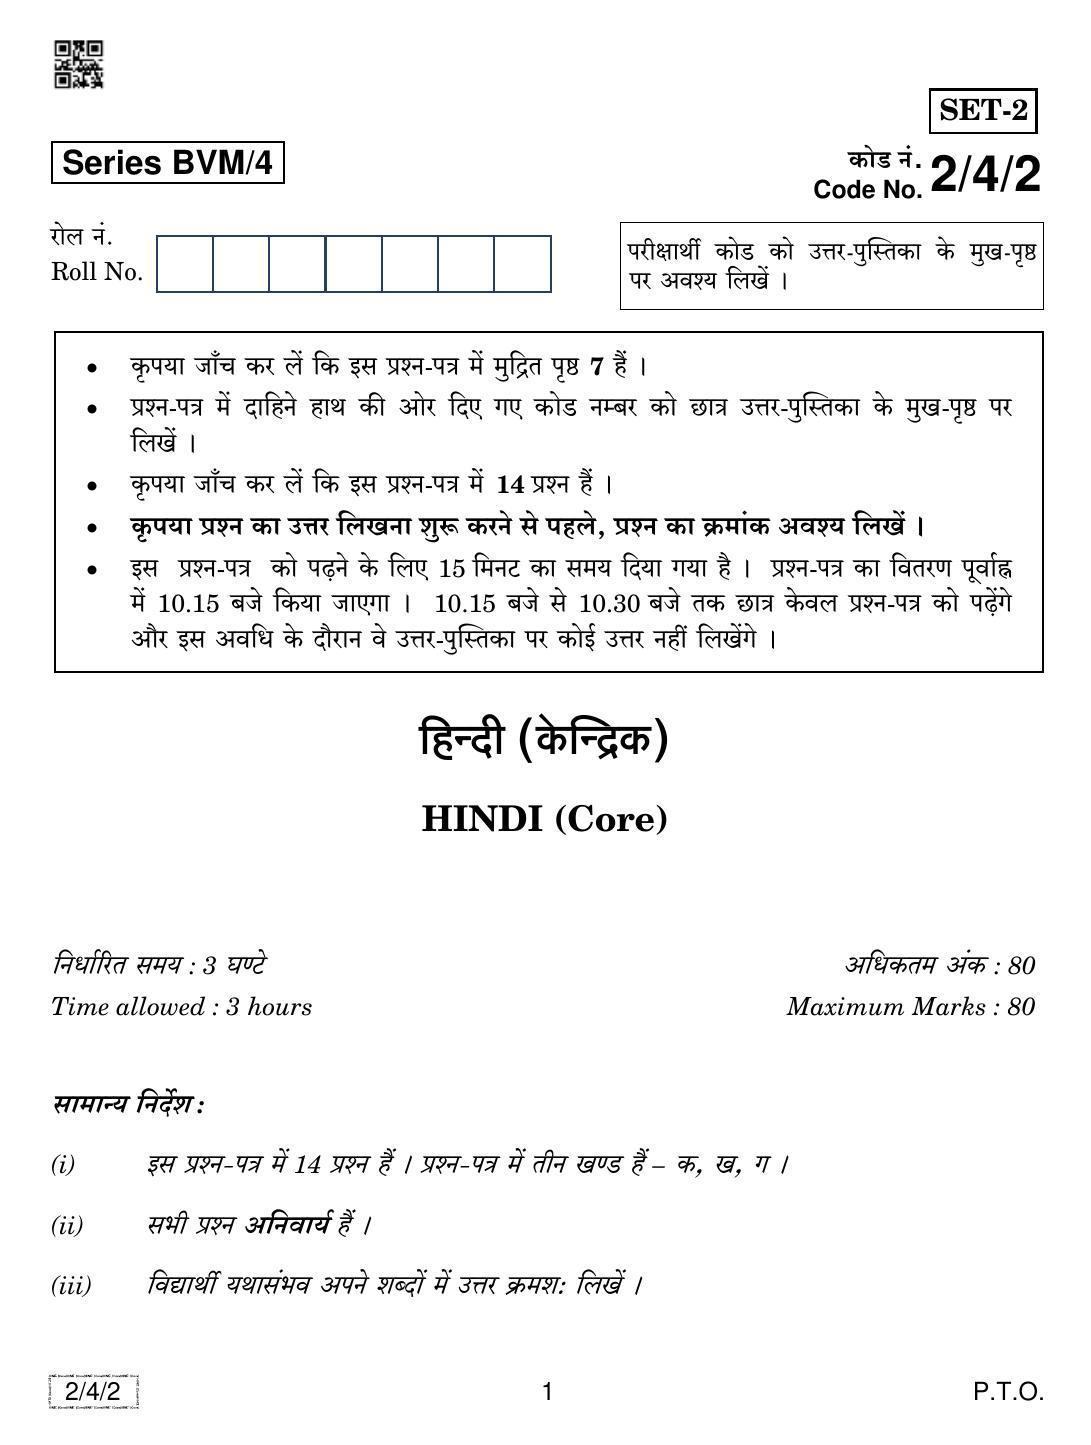 CBSE Class 12 2-4-2 Hindi Core 2019 Question Paper - Page 1